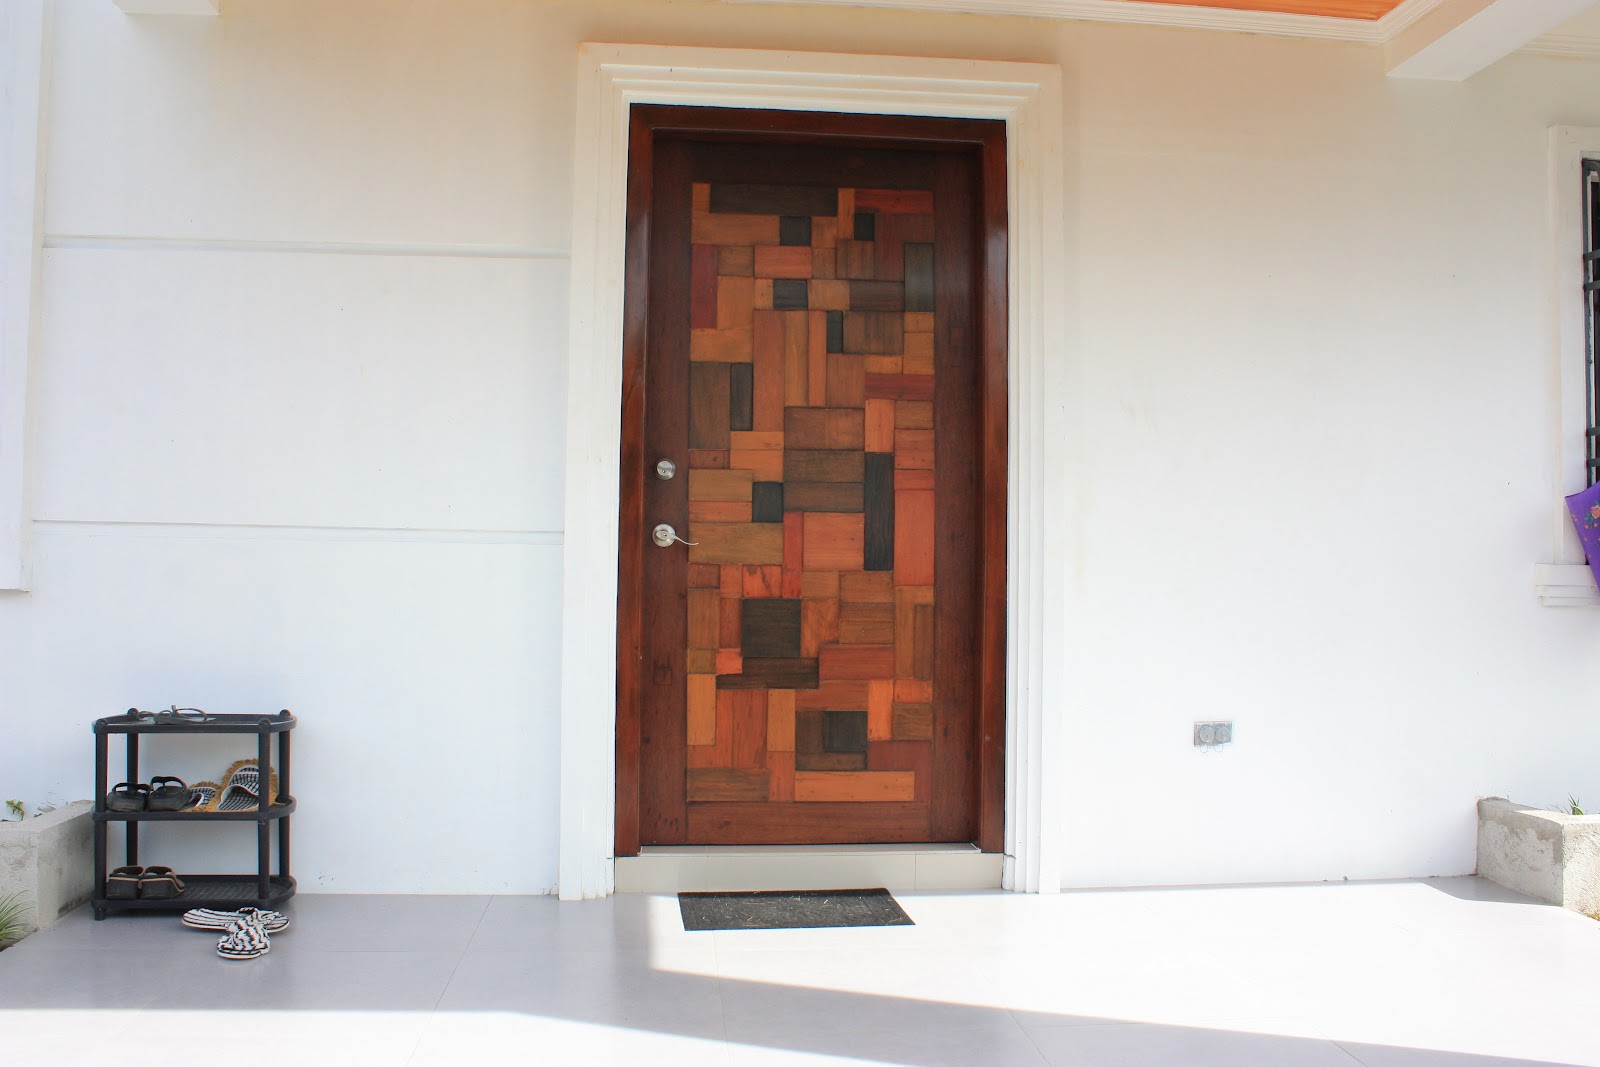 Design Inspirations: Home Entrance / Front Door